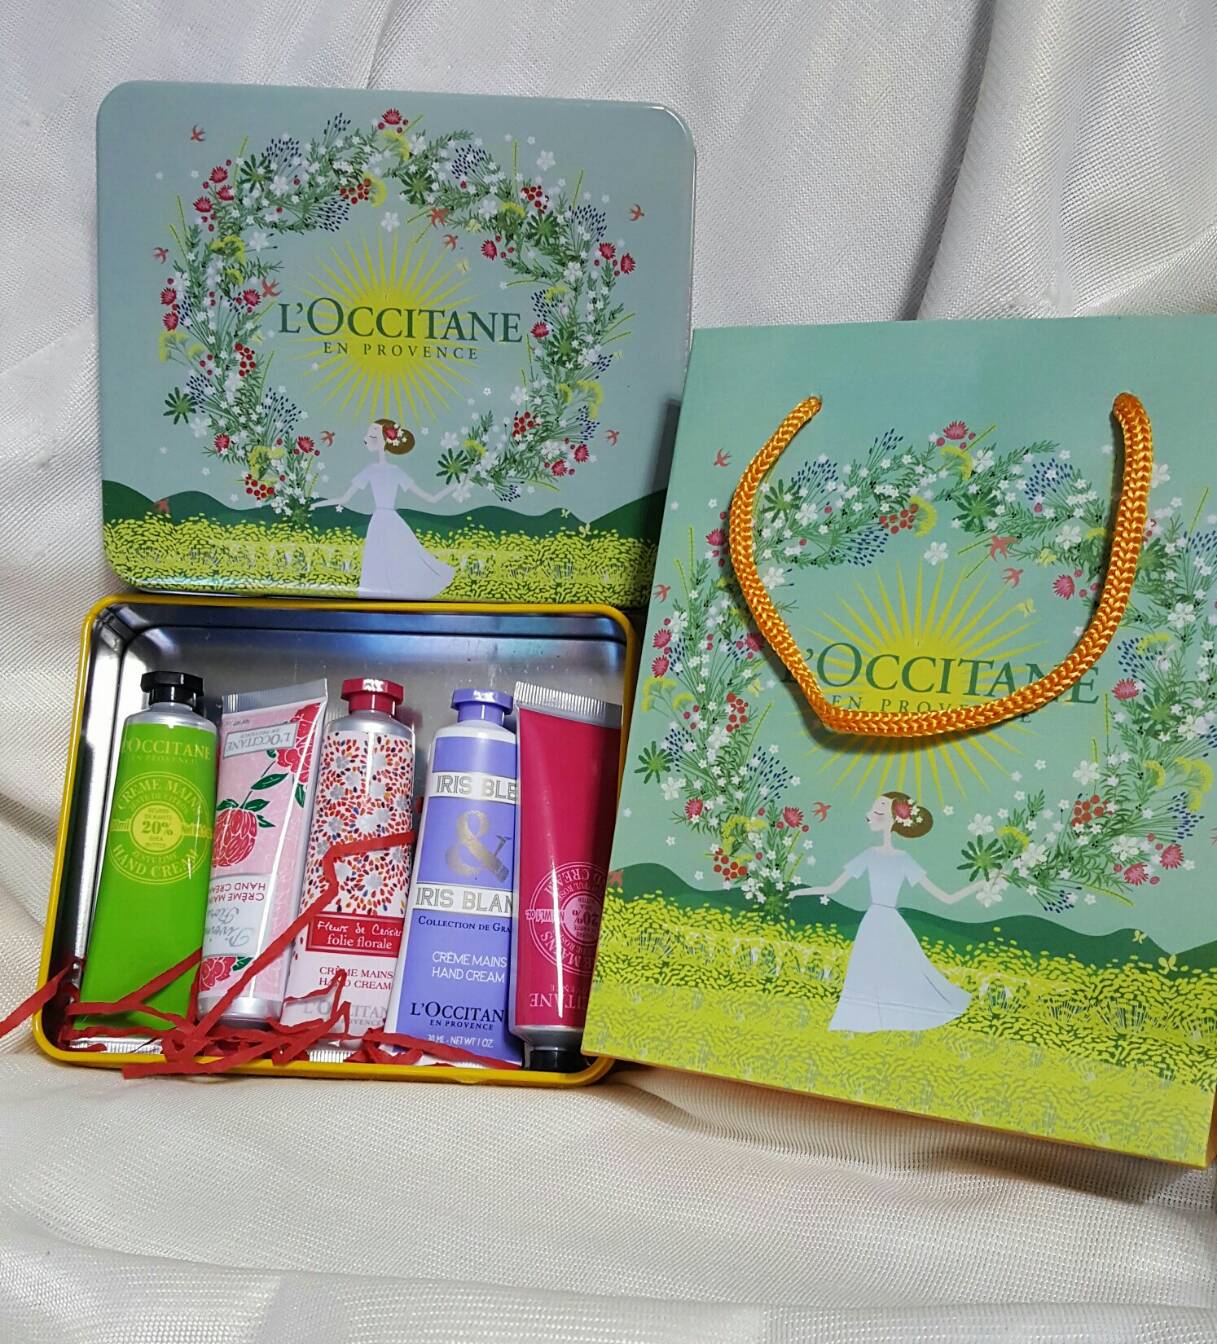 L\'occitane EN  provence collection  เซตบำรุงมือ 5 หลอดในกล่องเหล็กดีไซค์น่าใช้ พร้อมถุงห้าง(สีเขียว